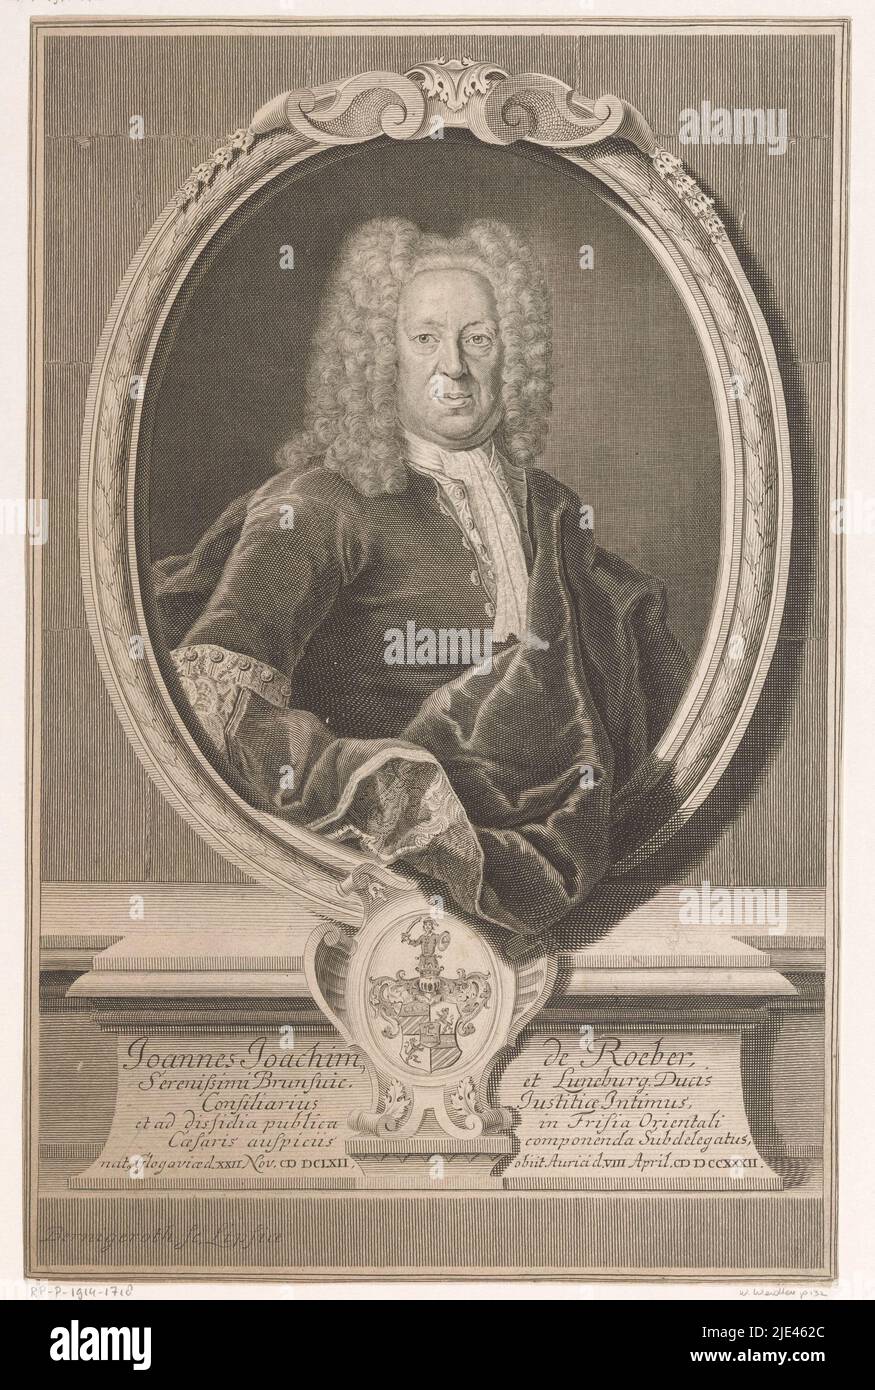 Retrato de Johann Joachim von Roeber, Martin Bernigeroth, 1732 - 1733, imprenta: Martin Bernigeroth, (mencionado en el objeto), Leipzig, 1732 - 1733, papel, grabado de 309 mm de alto x 200 mm de ancho Foto de stock